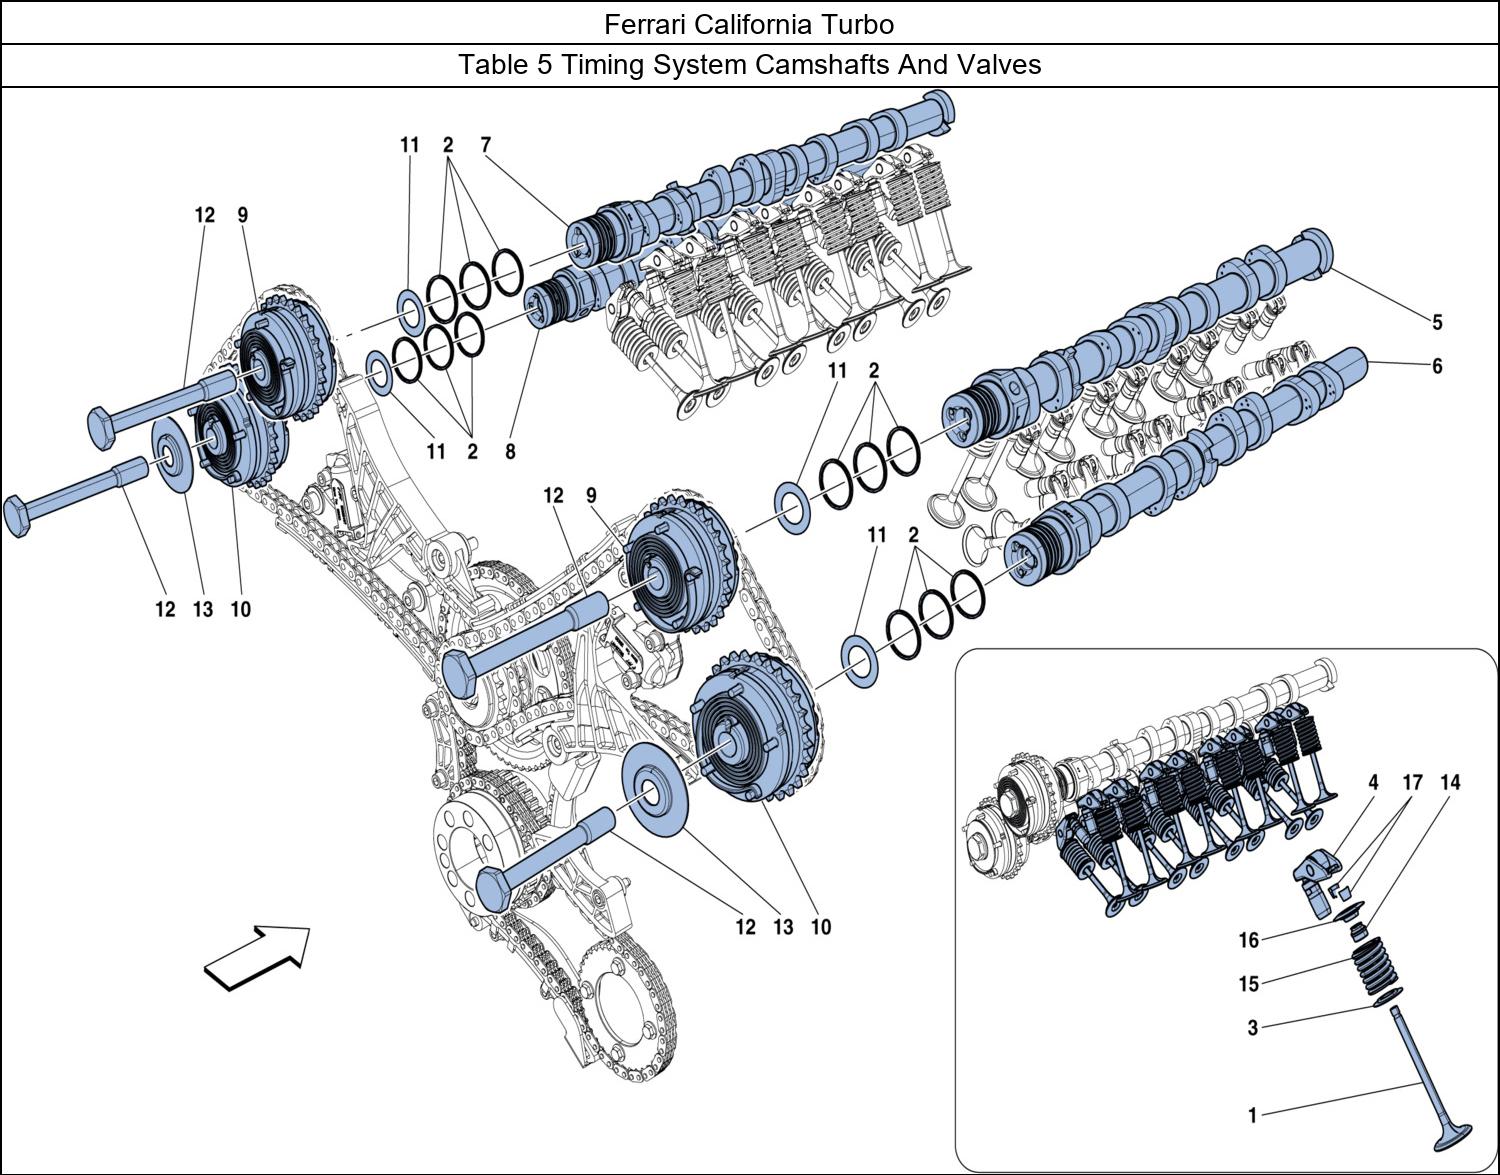 Ferrari Parts Ferrari California Turbo Table 5 Timing System Camshafts And Valves